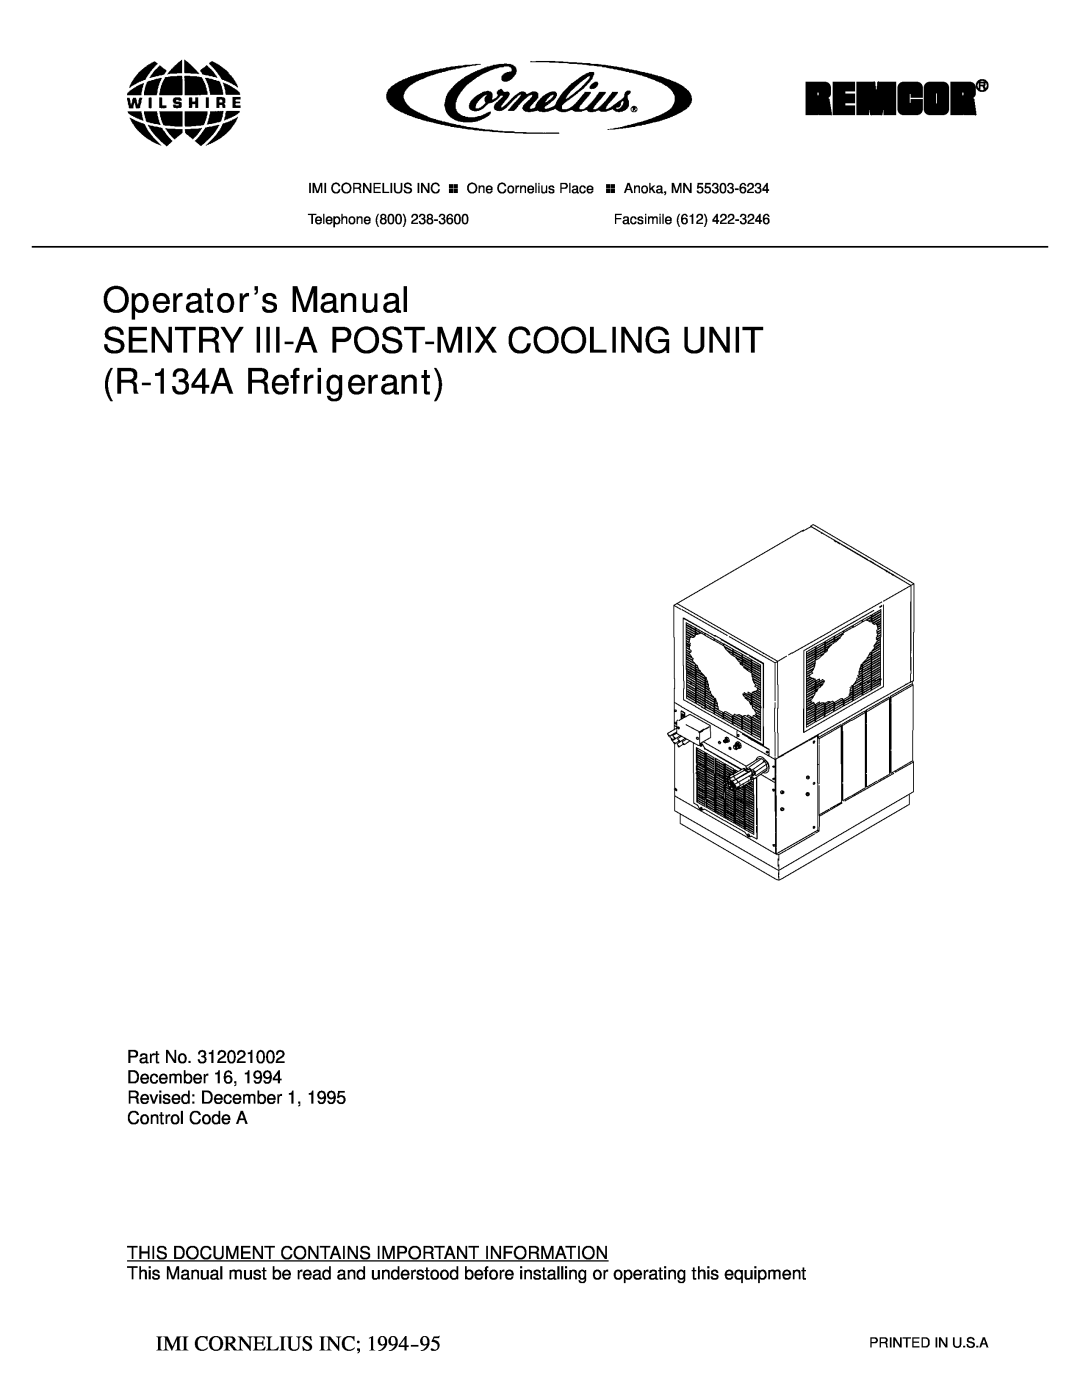 Cornelius manual Operator’s Manual SENTRY III-A POST-MIX COOLING UNIT, R-134A Refrigerant, Ó Imi Cornelius Inc 